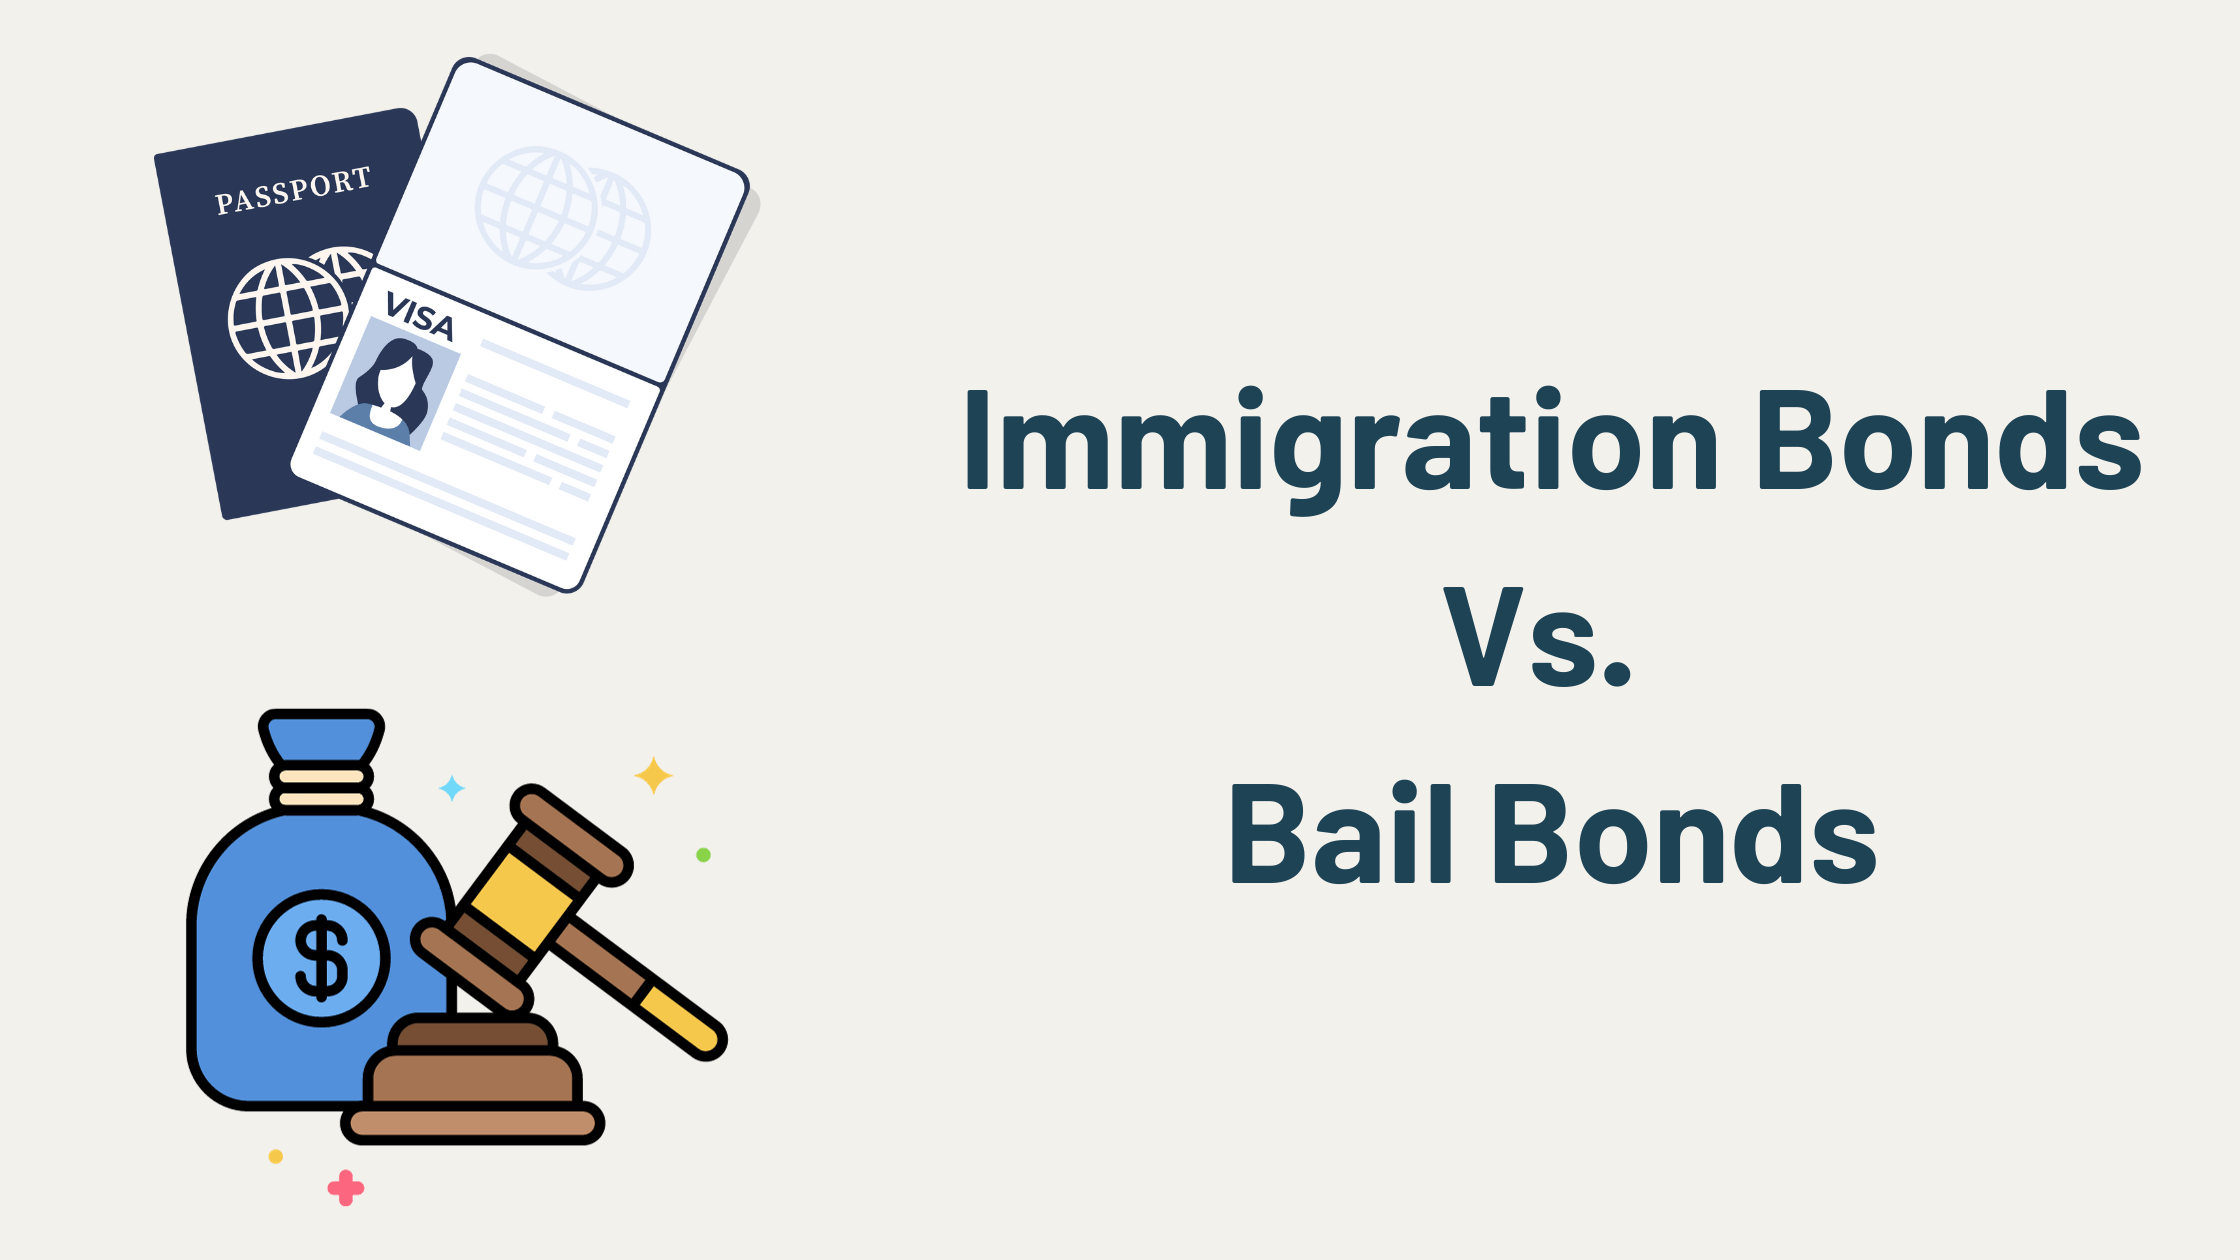 Immigration Bonds vs. Bail Bonds